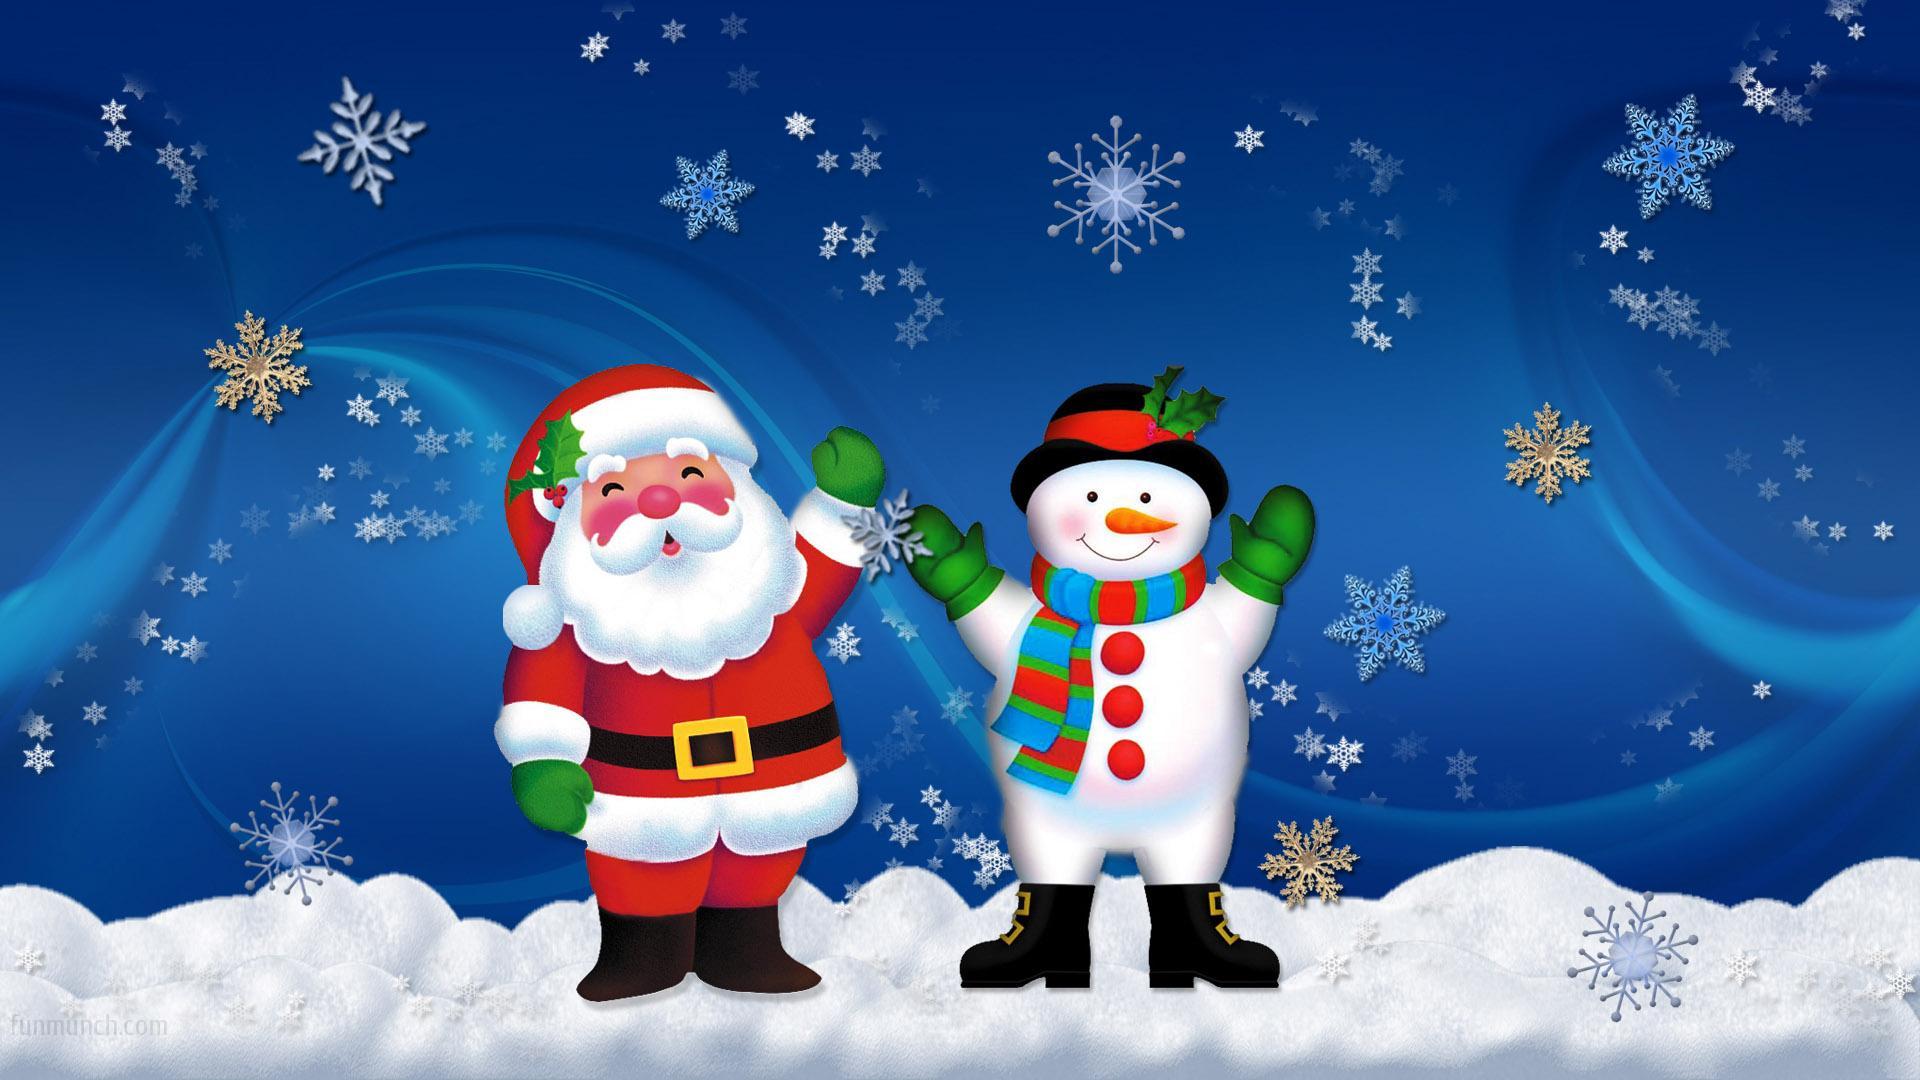 Animated Christmas Desktop Backgrounds wallpaper Animated Christmas